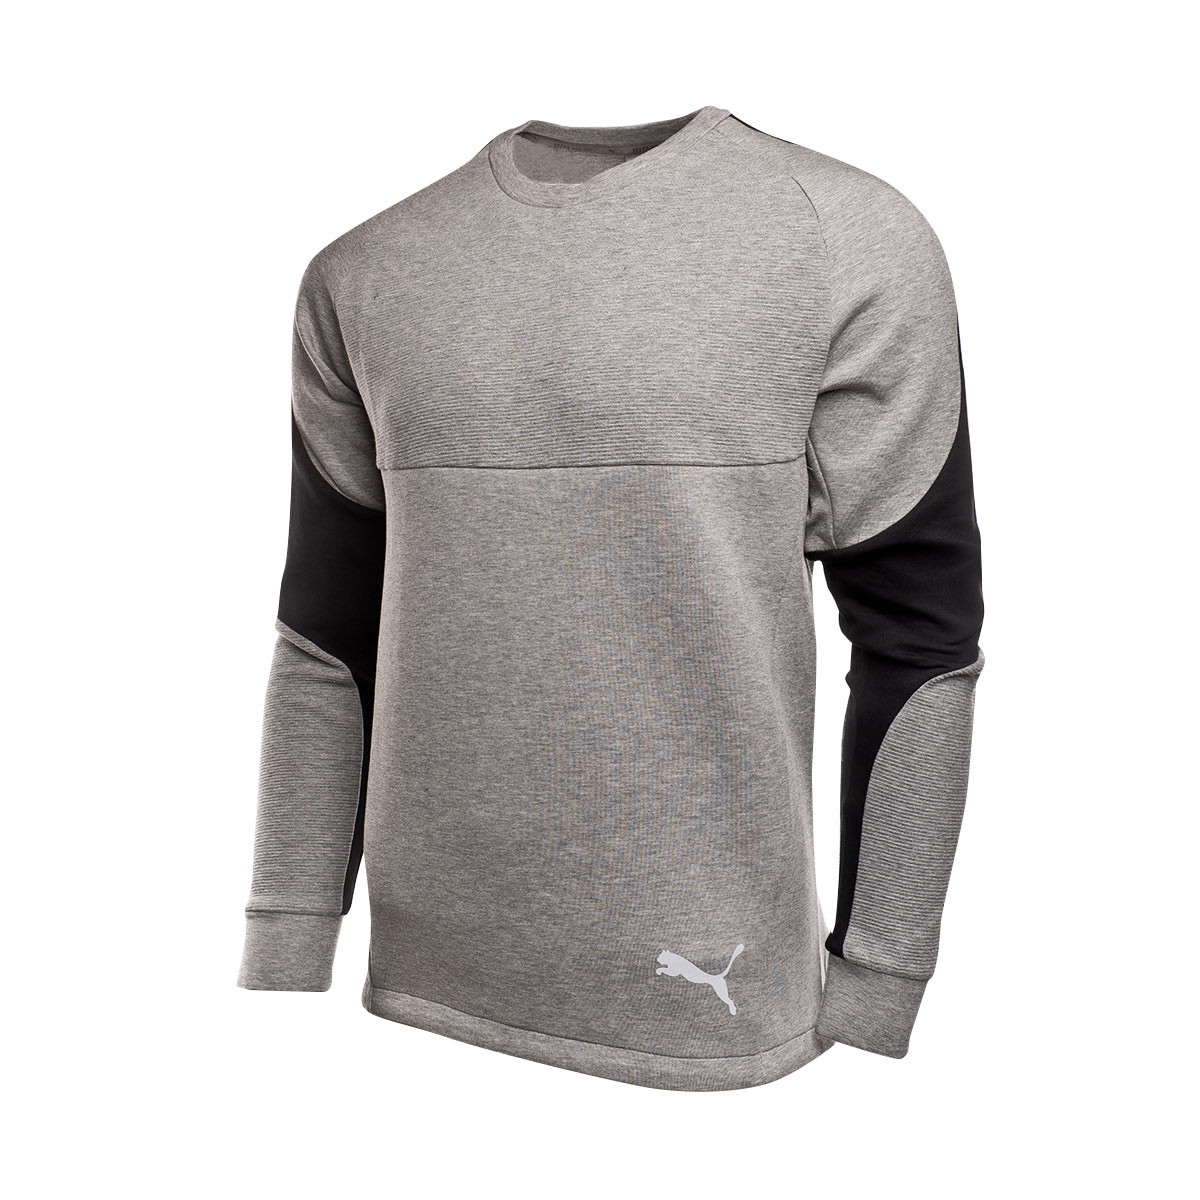 puma gray sweatshirt